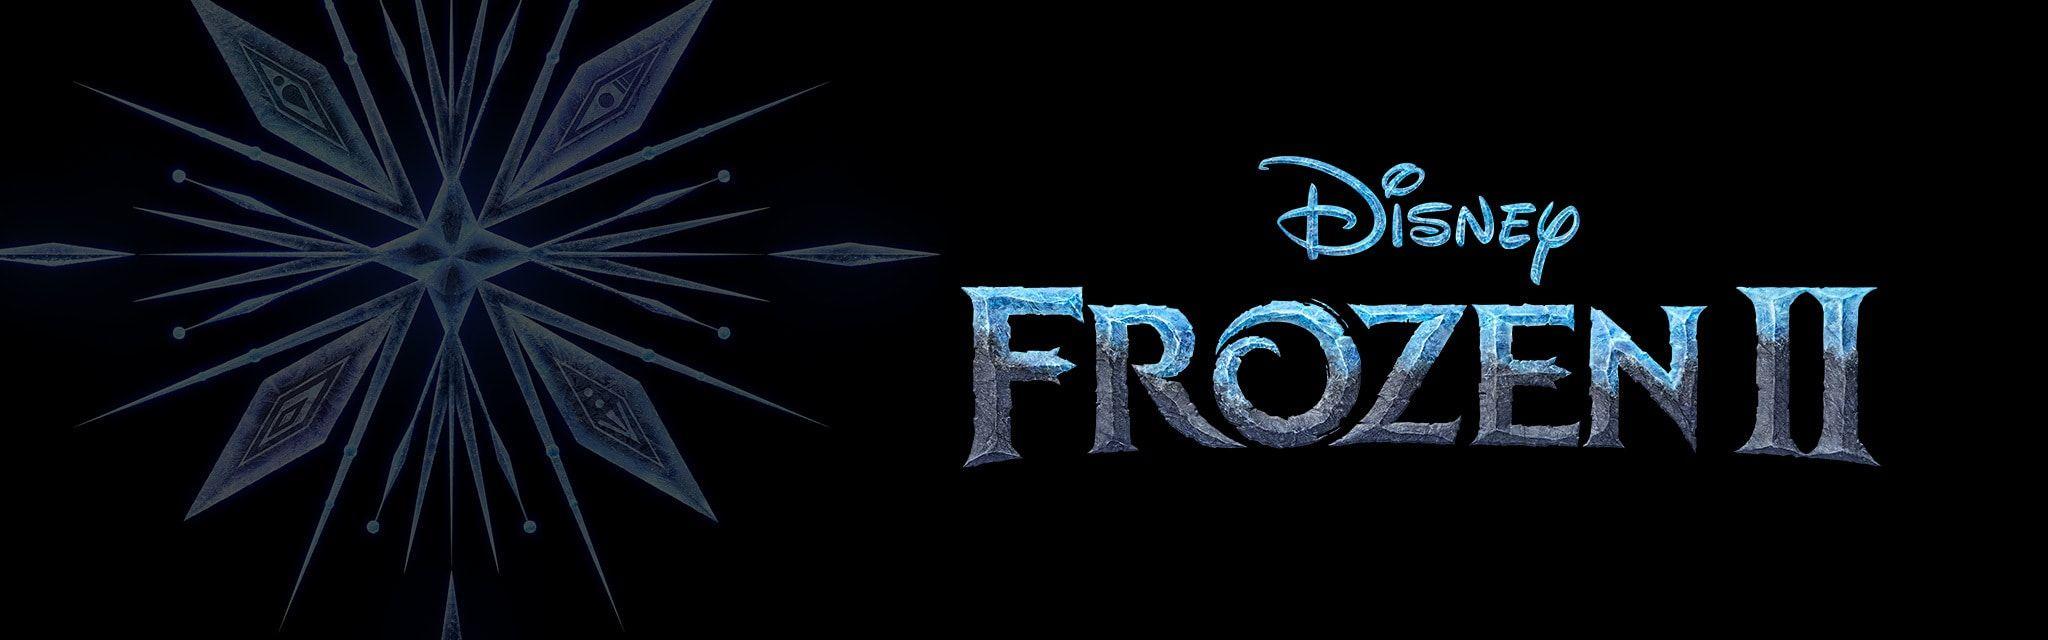 Walt Disney Studios Home Entertainment Logo - Disney Movies | Official Site